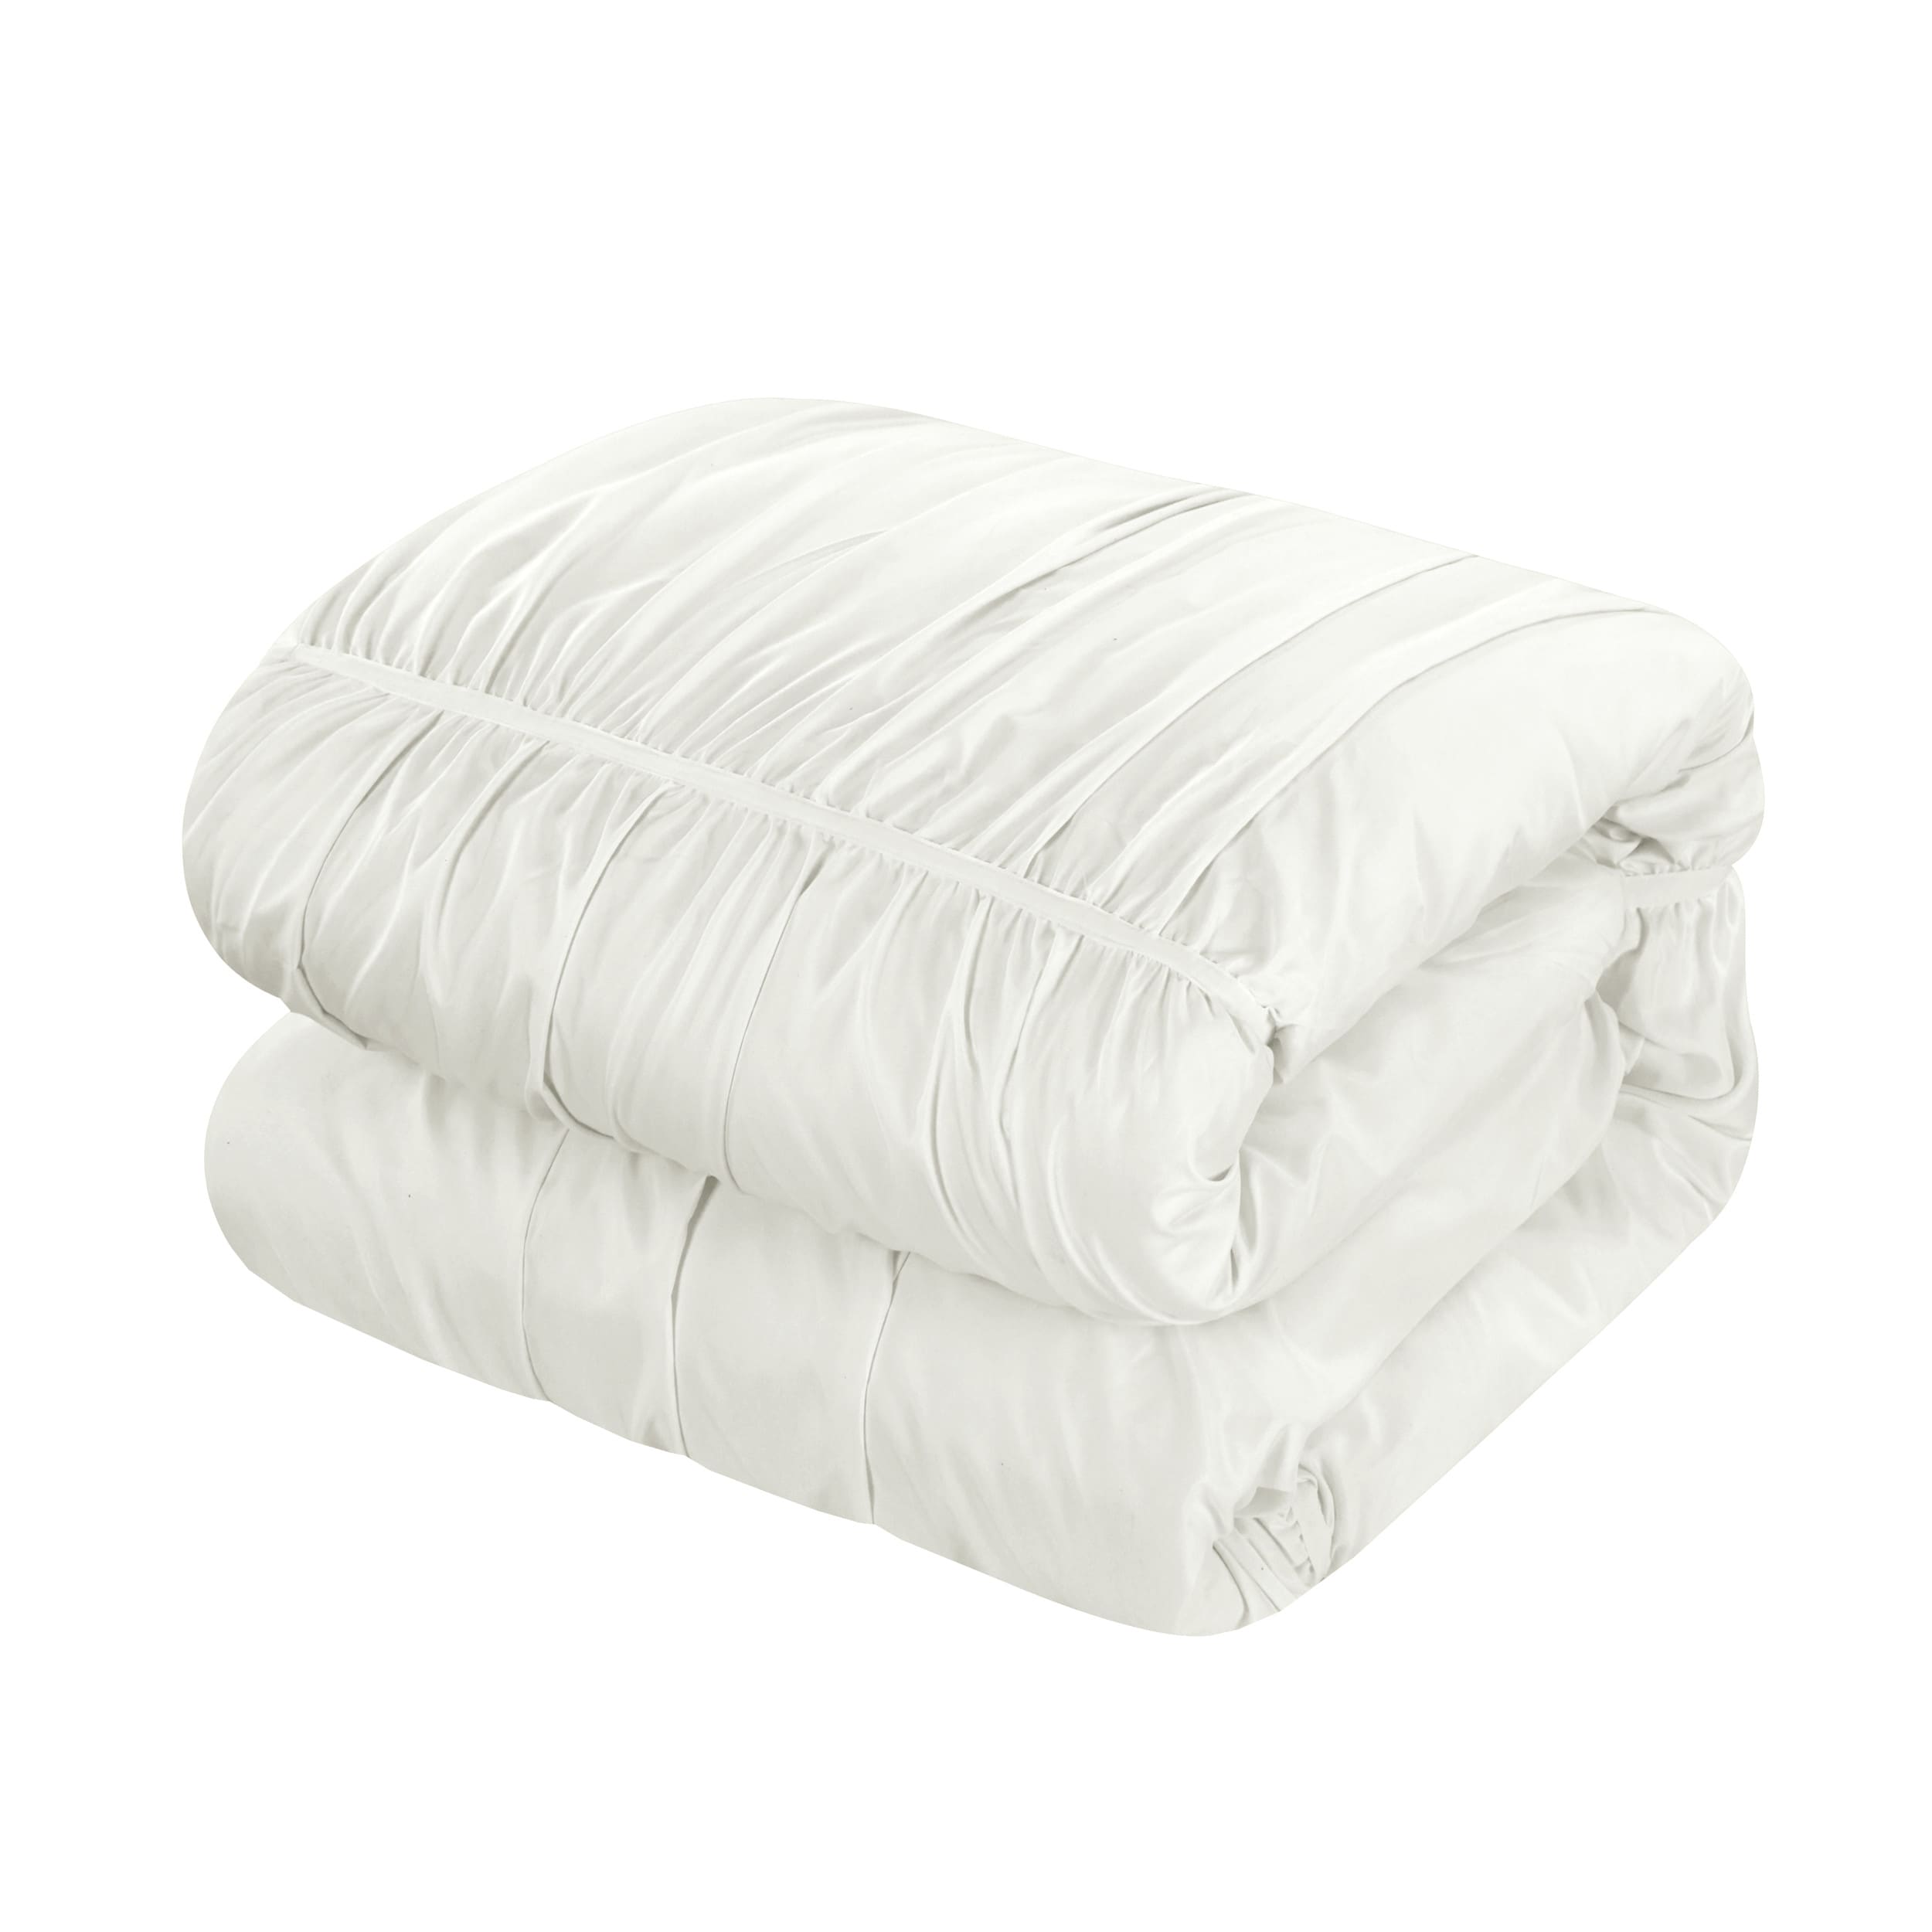 Chic Home Design Kaiah 3-Piece White Queen Comforter Set